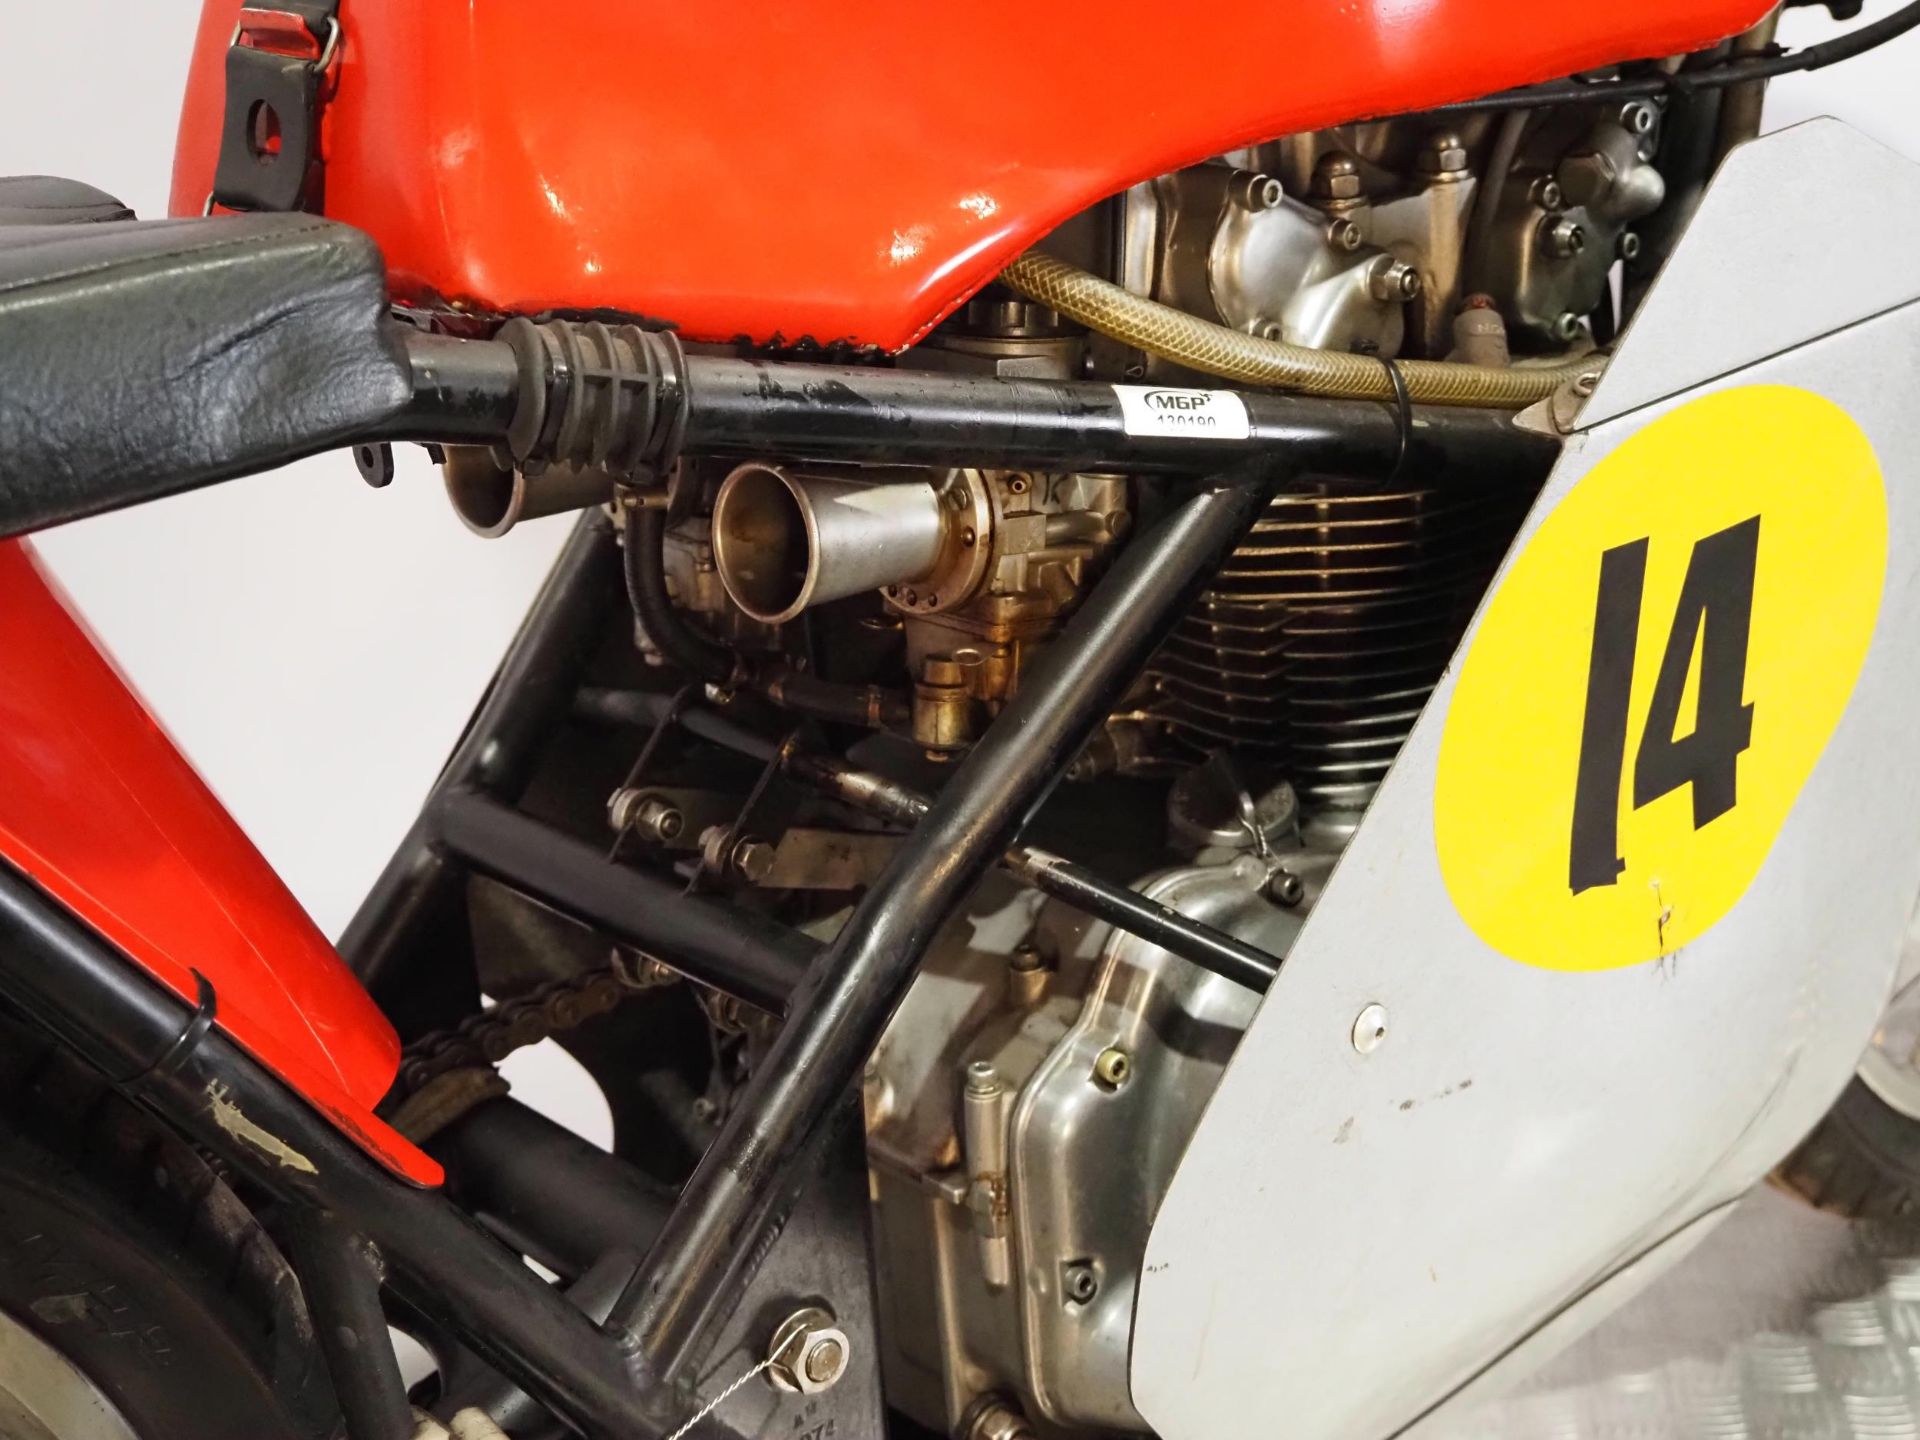 Honda Drixton CB450E race bike. 500cc. Engine No. E-3017469 Fitted with a Nova 6 speed gearbox, a - Image 5 of 8